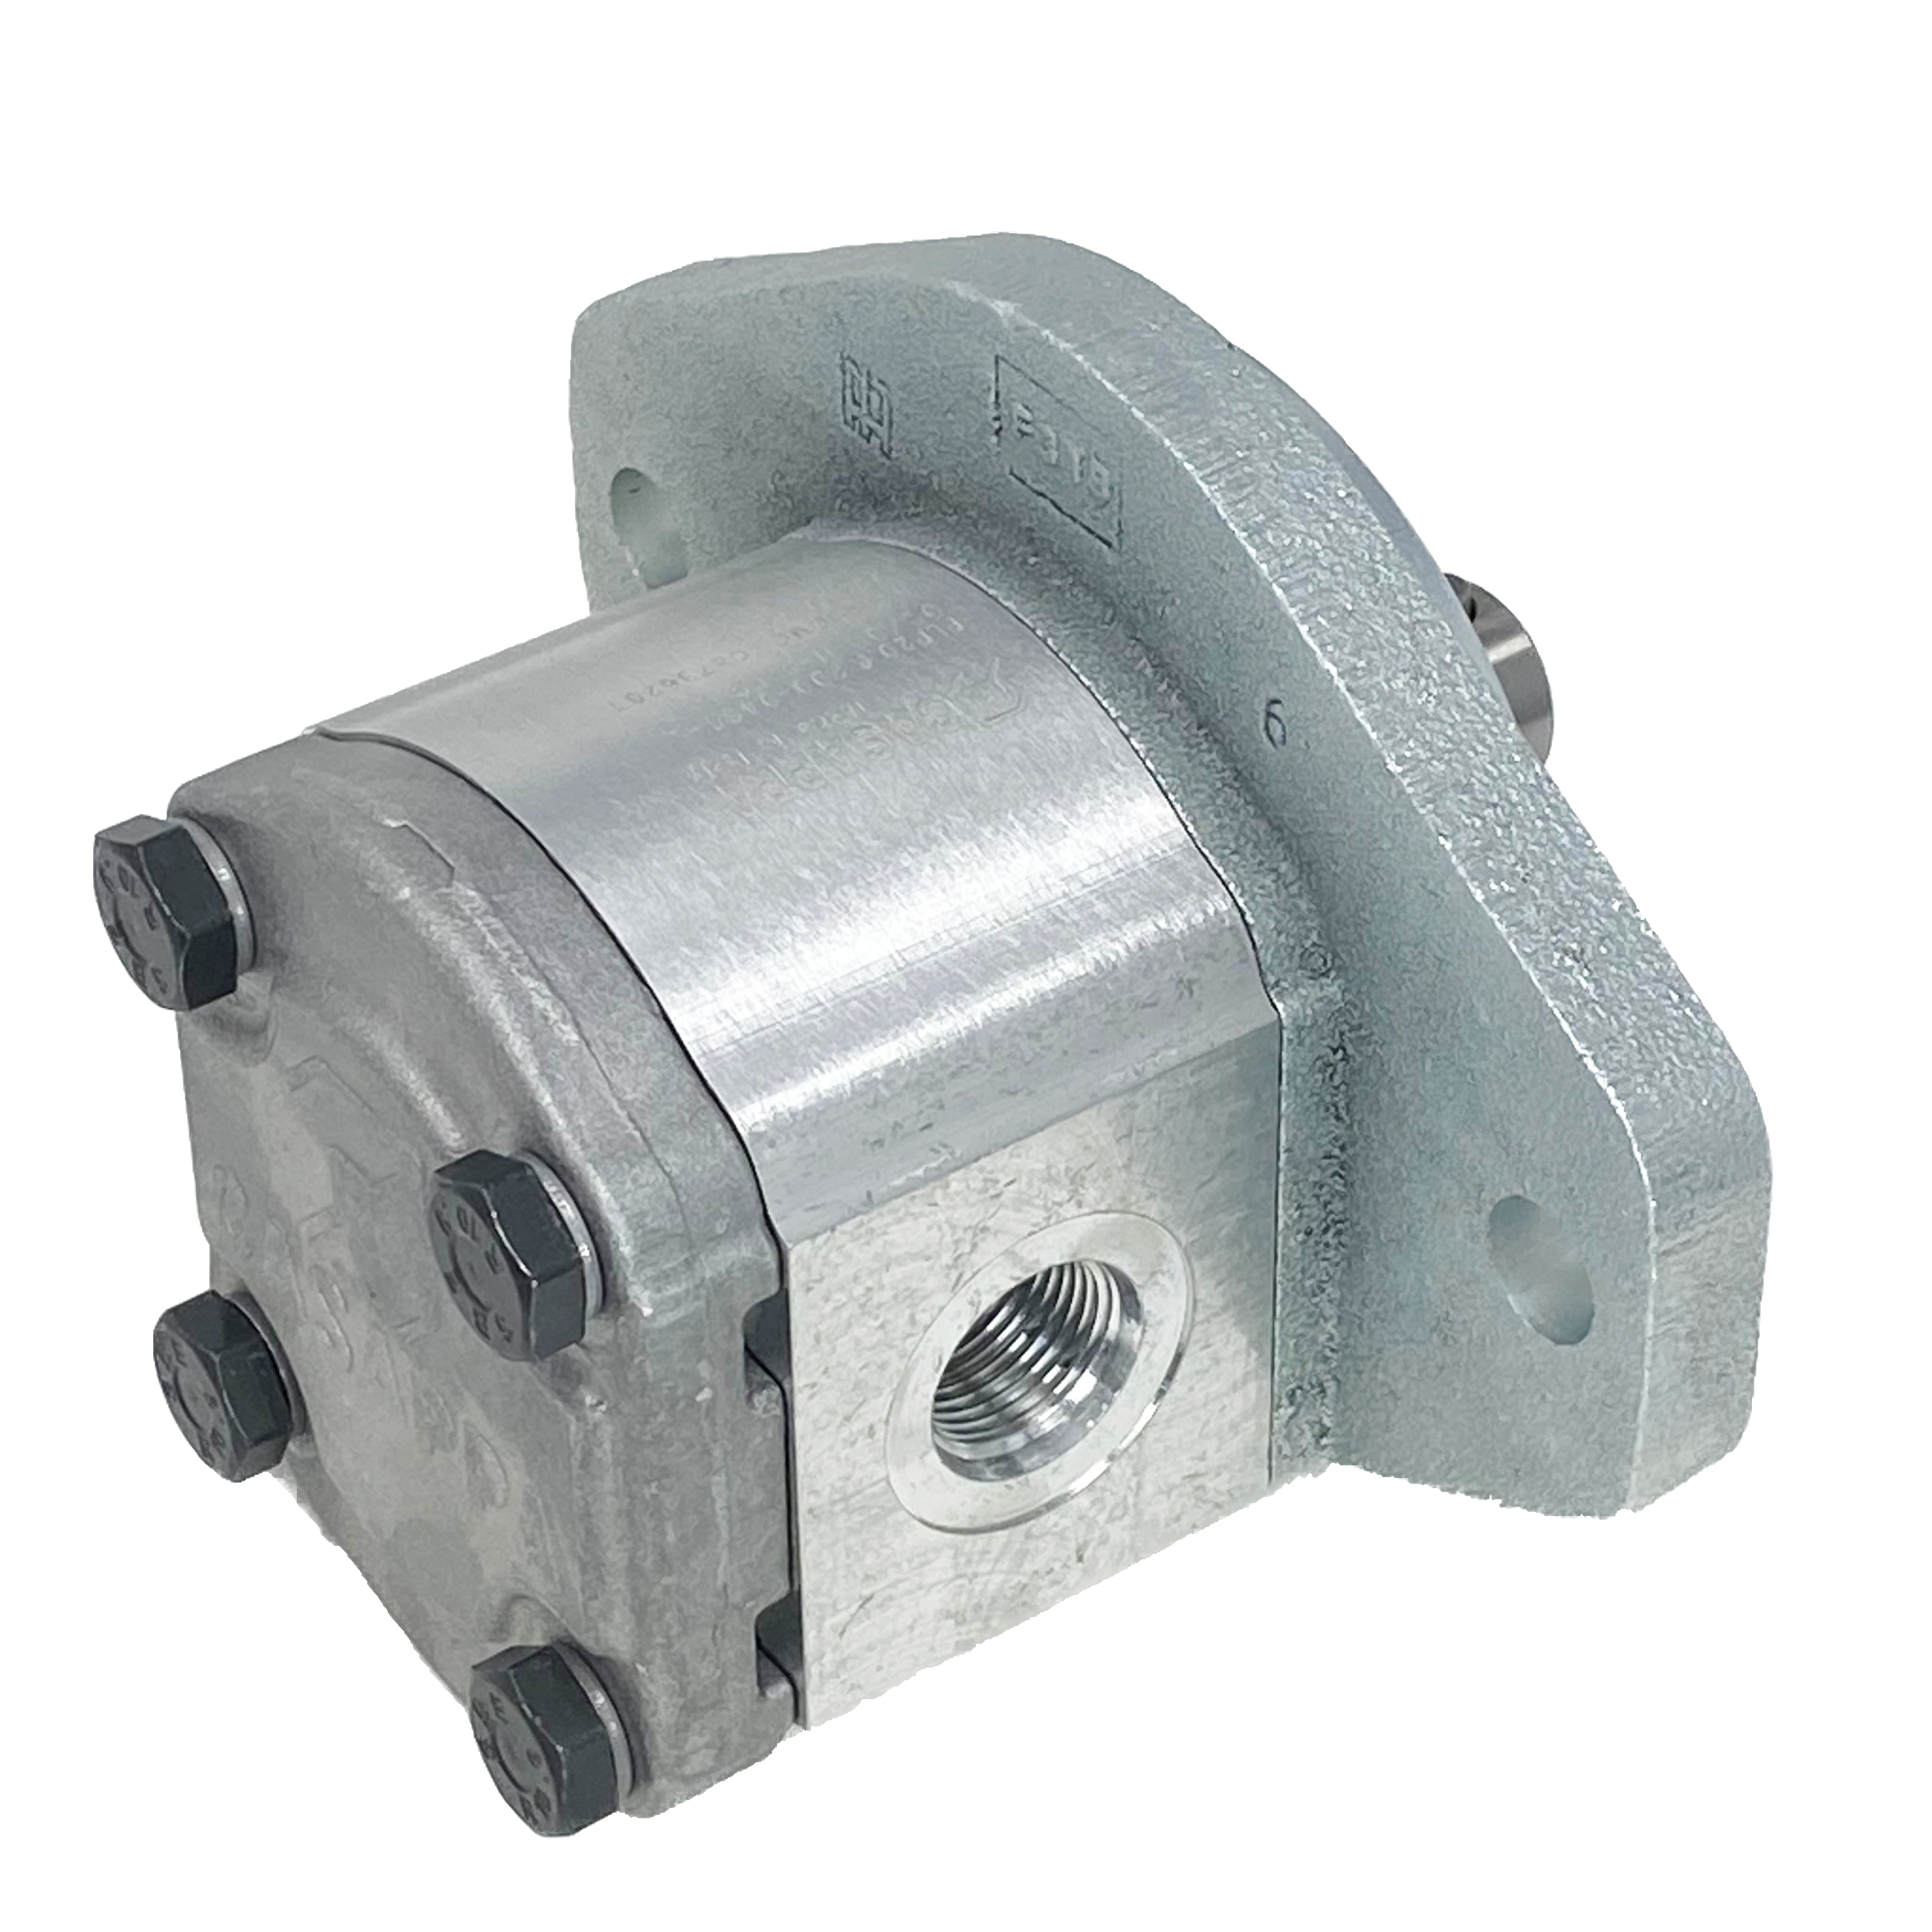 PLM20.14R0-31S1-LOC/OD-N-EL : Casappa Polaris Gear Motor, 14.53cc, 3625psi Rated, 3500RPM, Reversible Rear External Drain, 5/8" Bore x 5/32" Key Shaft, SAE A 2-Bolt Flange, 0.625 (5/8") #10 SAE Inlet, 0.75 (3/4") #12 SAE Outlet, Aluminum Body & Flange